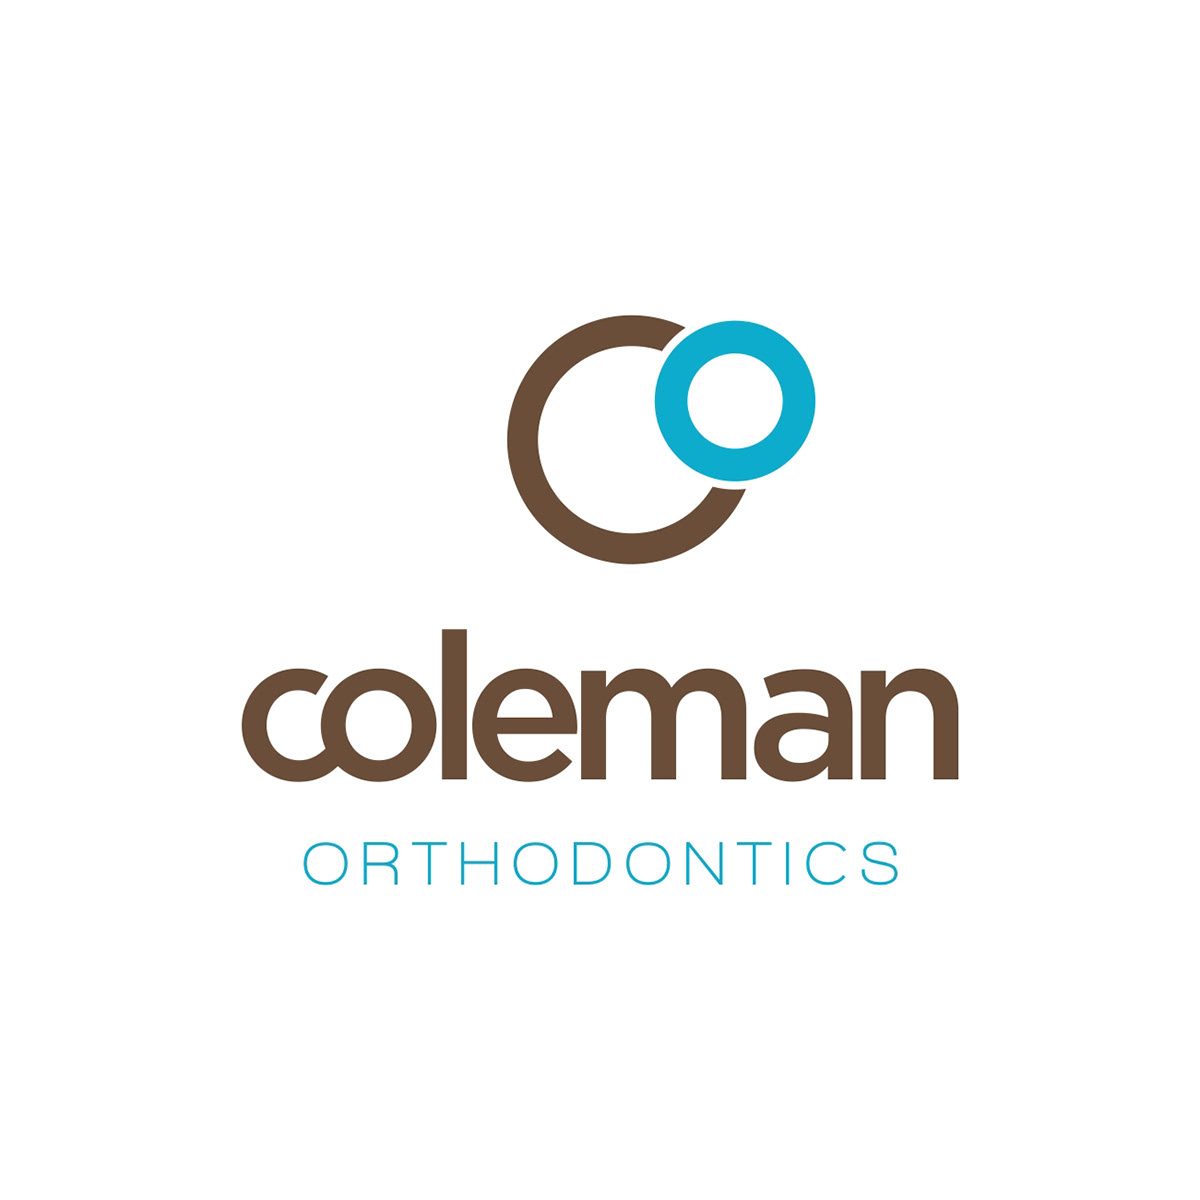 orthodontics  logo dentistry